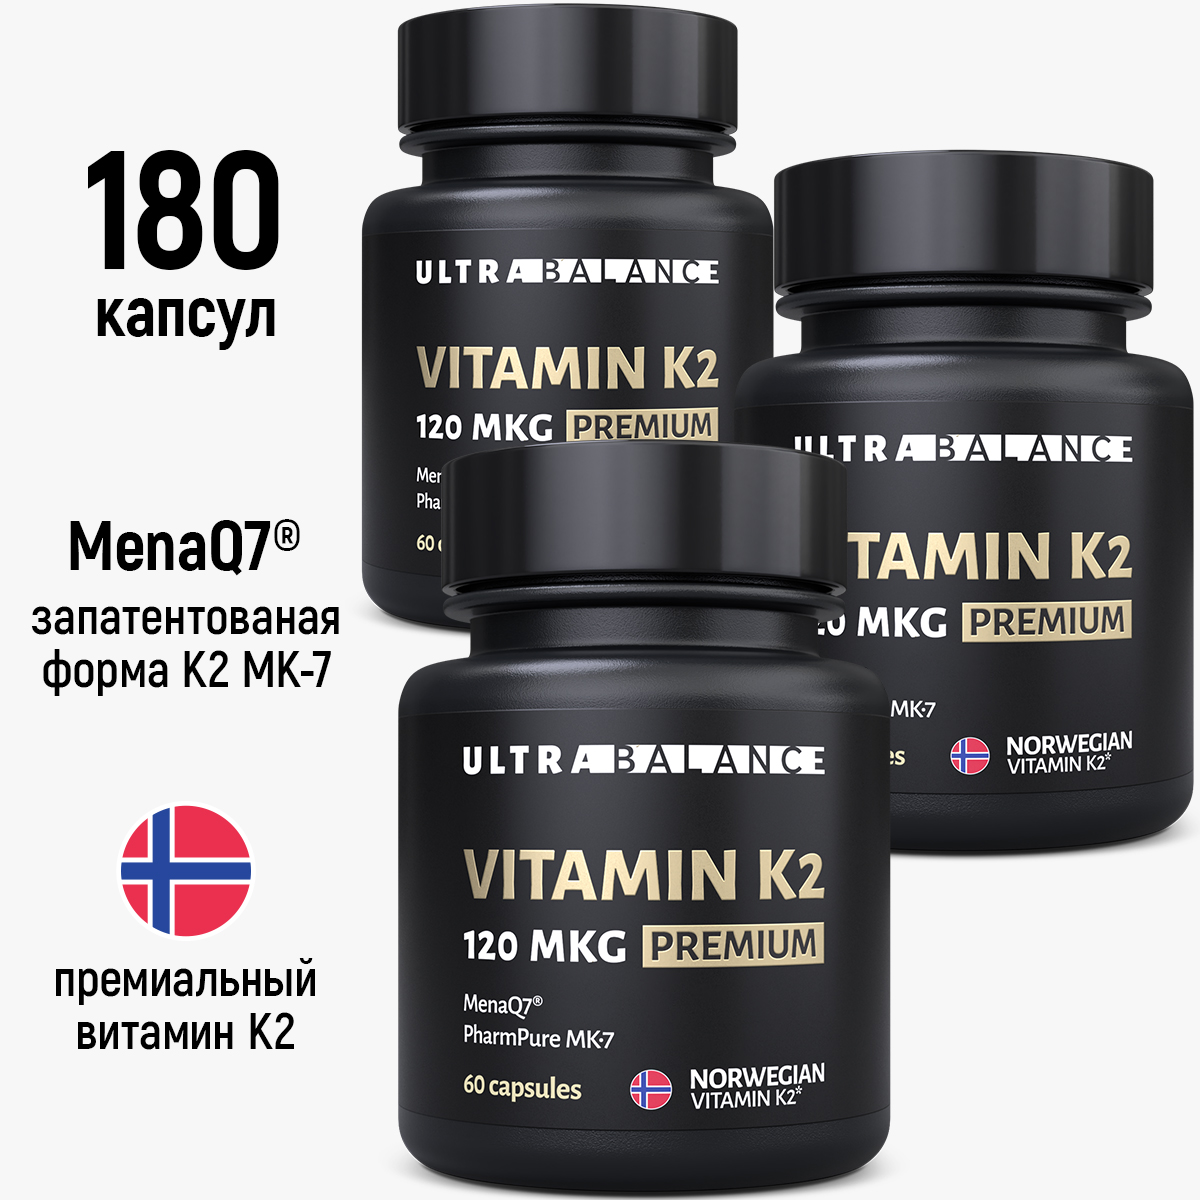 Купить Vitamin K2 Premium 120 мкг, Витамин K2 UltraBalance Premium капсулы 120 мкг 180 шт.